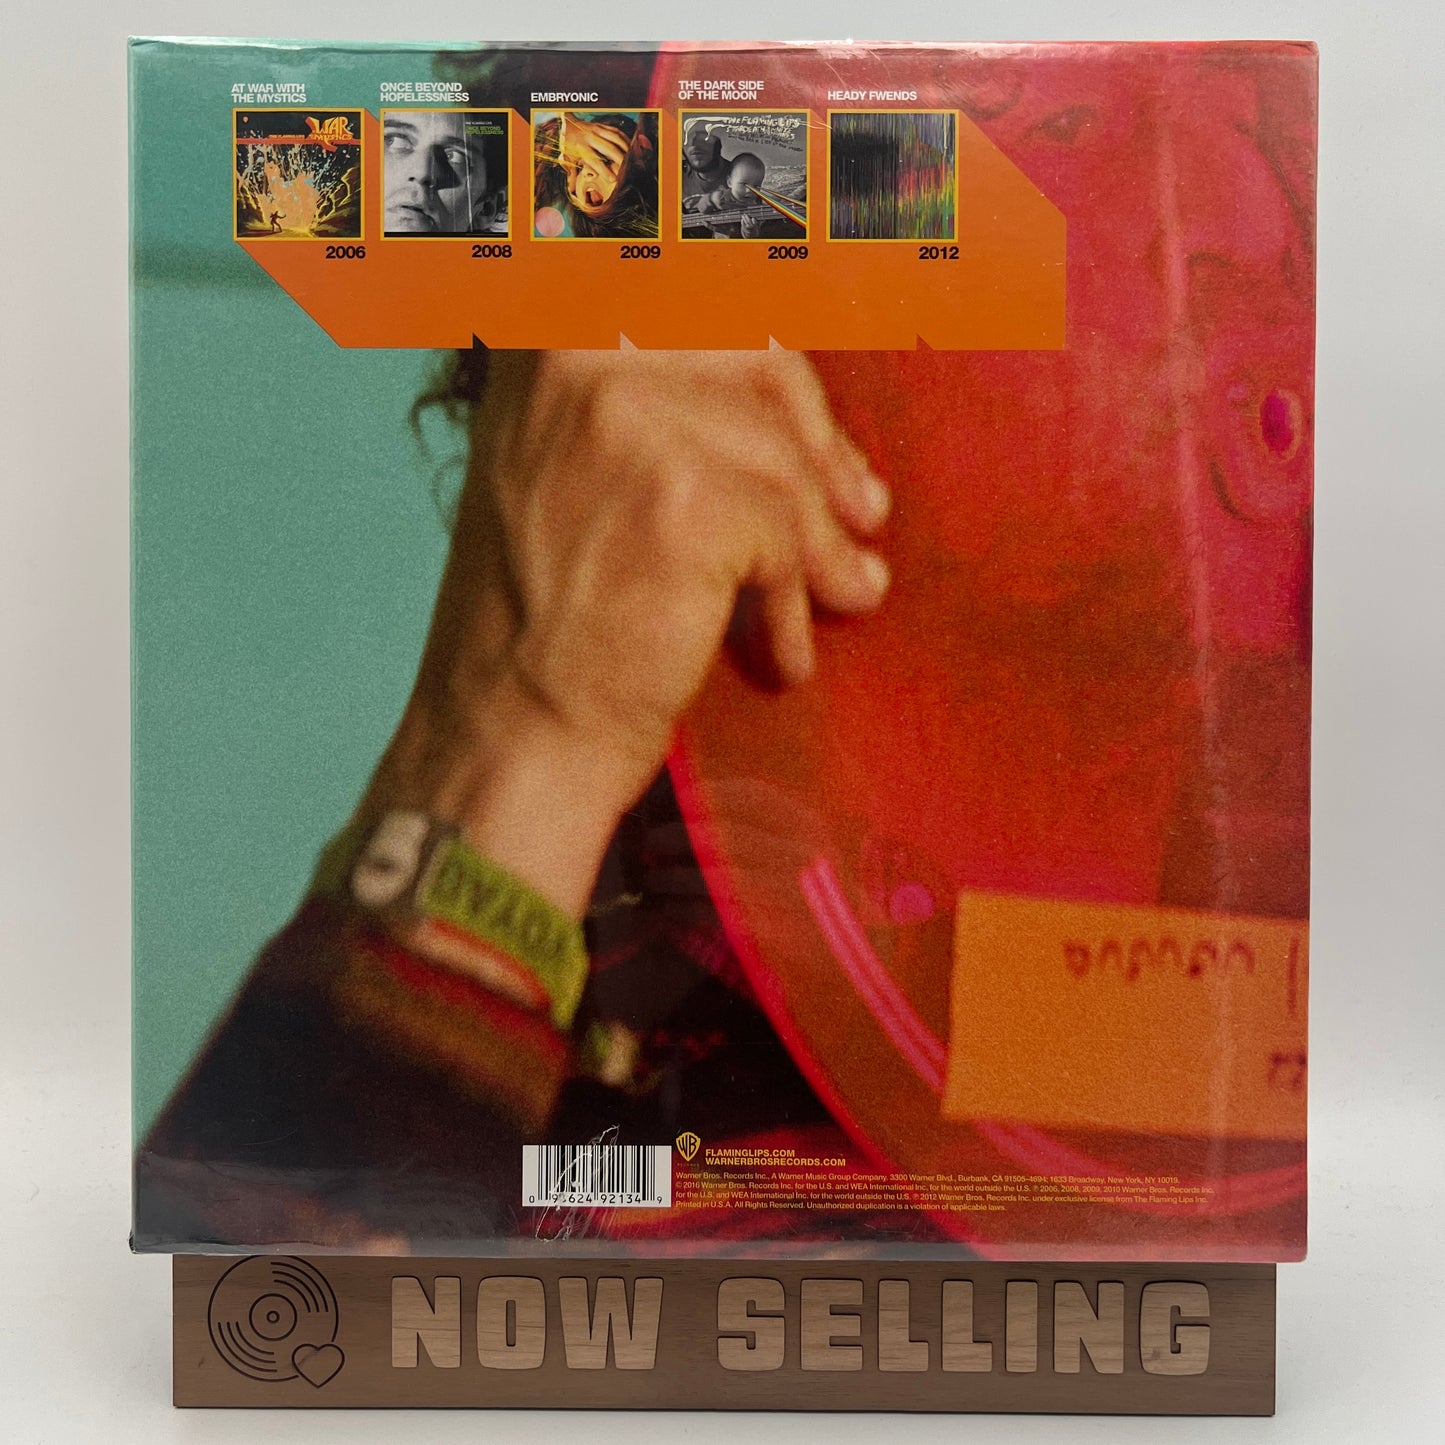 The Flaming Lips - Heady Nuggs: Second 5 Warner Bros. Records 2006-2012 Vinyl Box Set